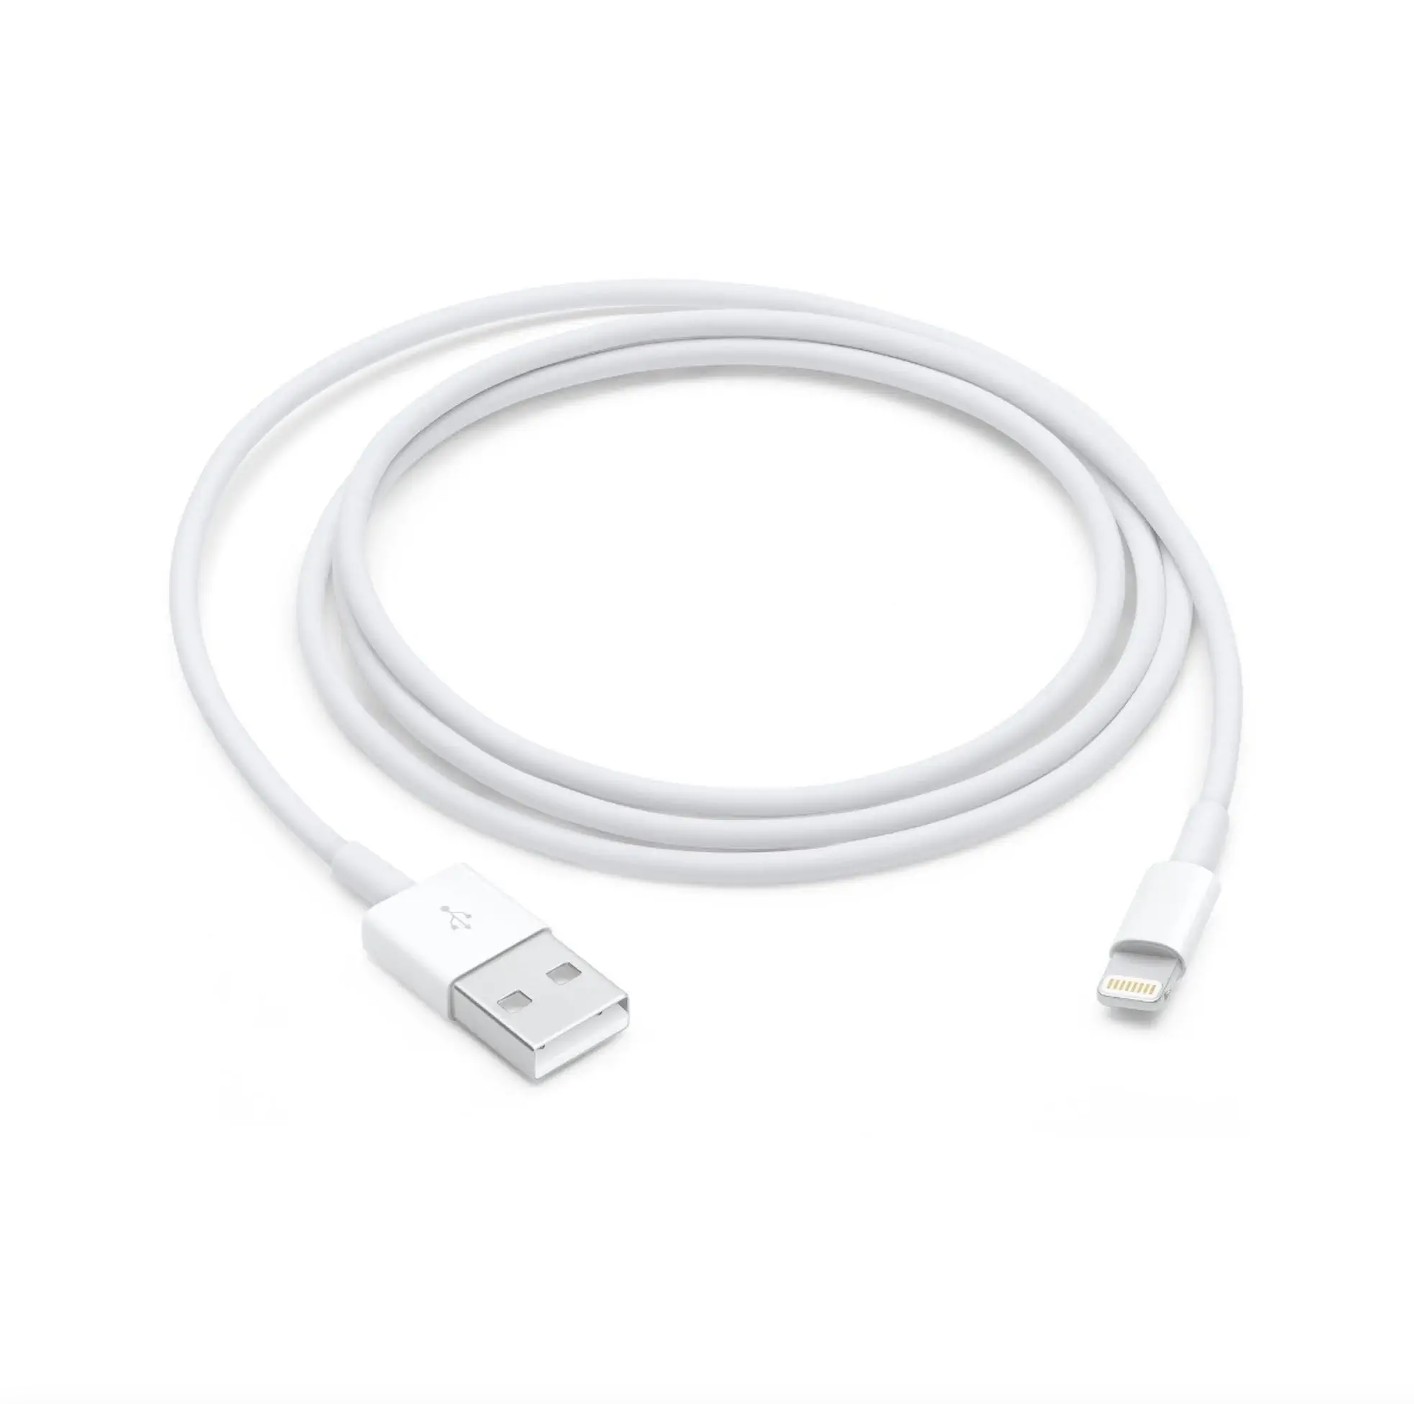 Кабель Lightning Apple Lightning to USB Cable 1m (MD818)